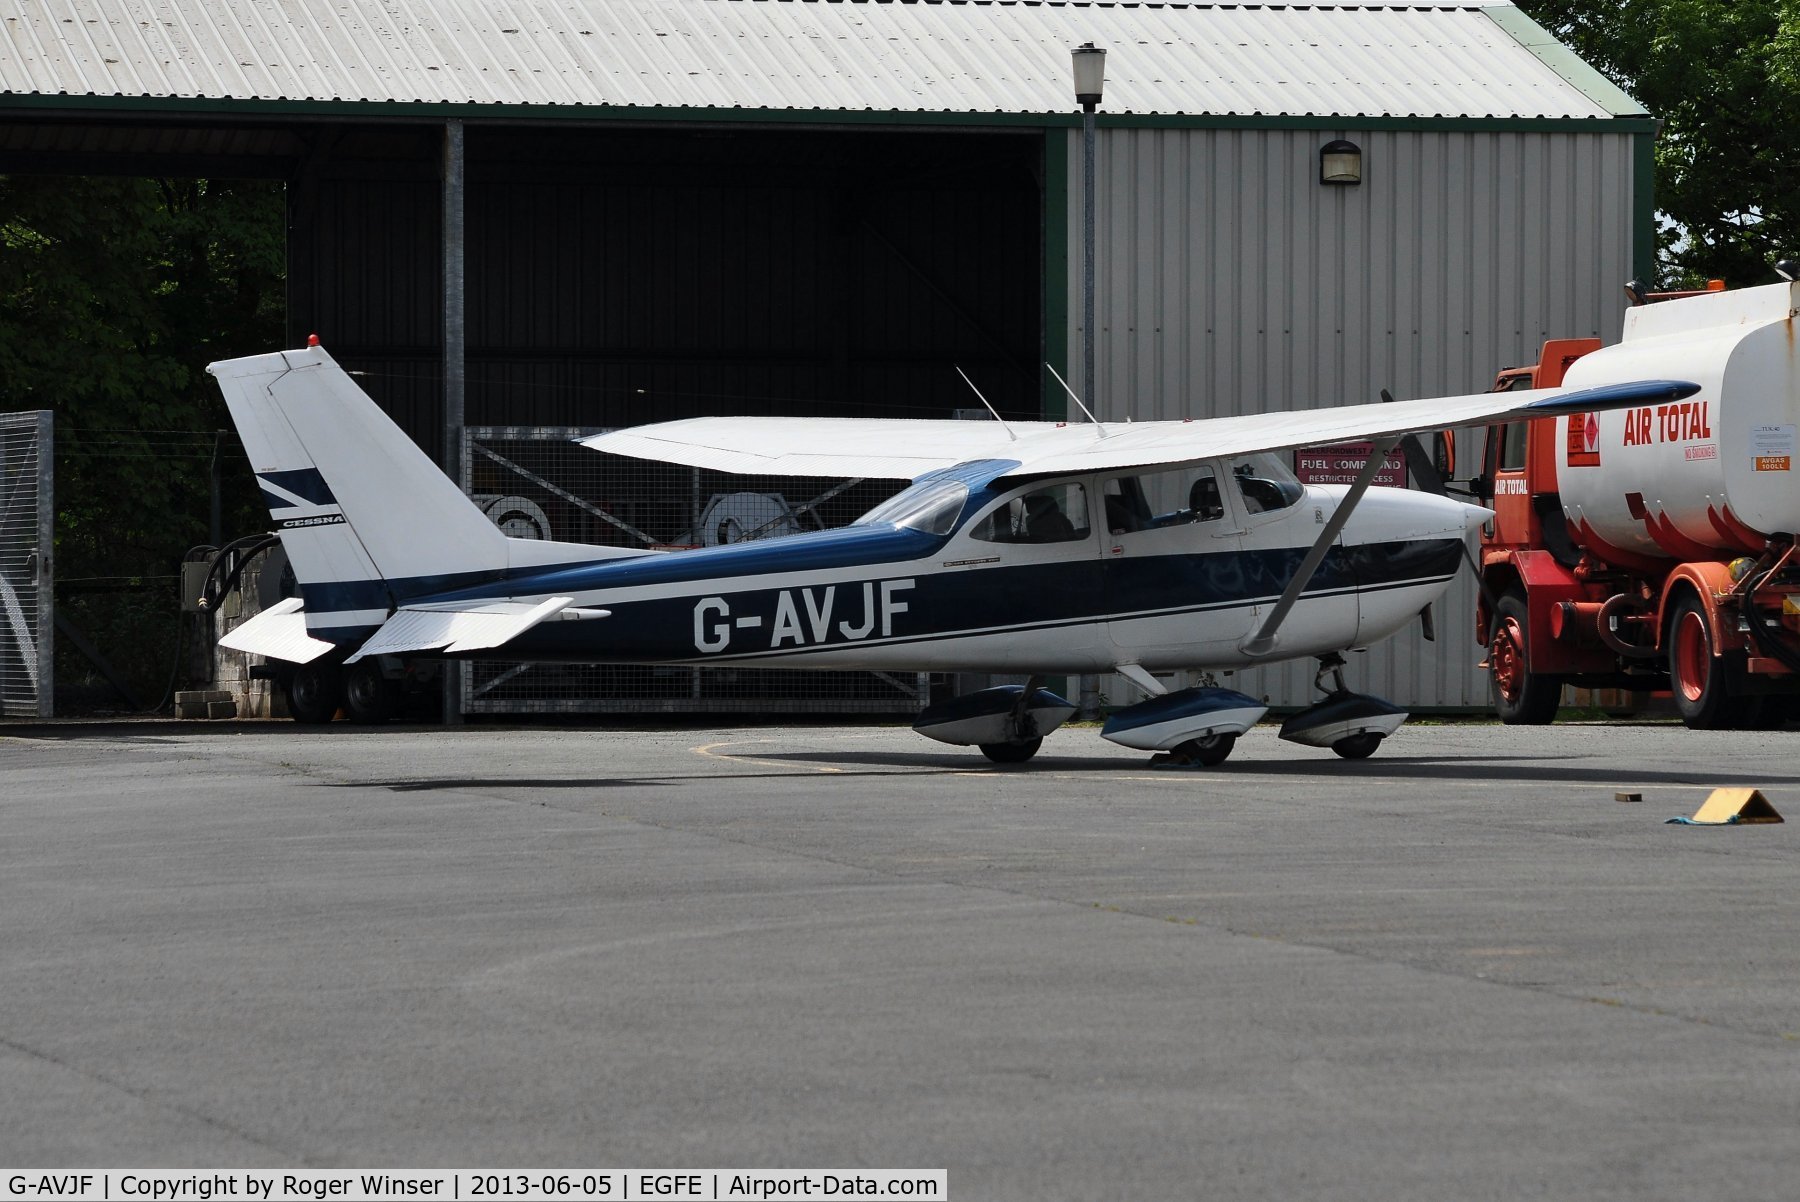 G-AVJF, 1967 Reims F172H Skyhawk C/N 0393, Resident Reims (Cessna) Skyhawk operated by FlyWales.